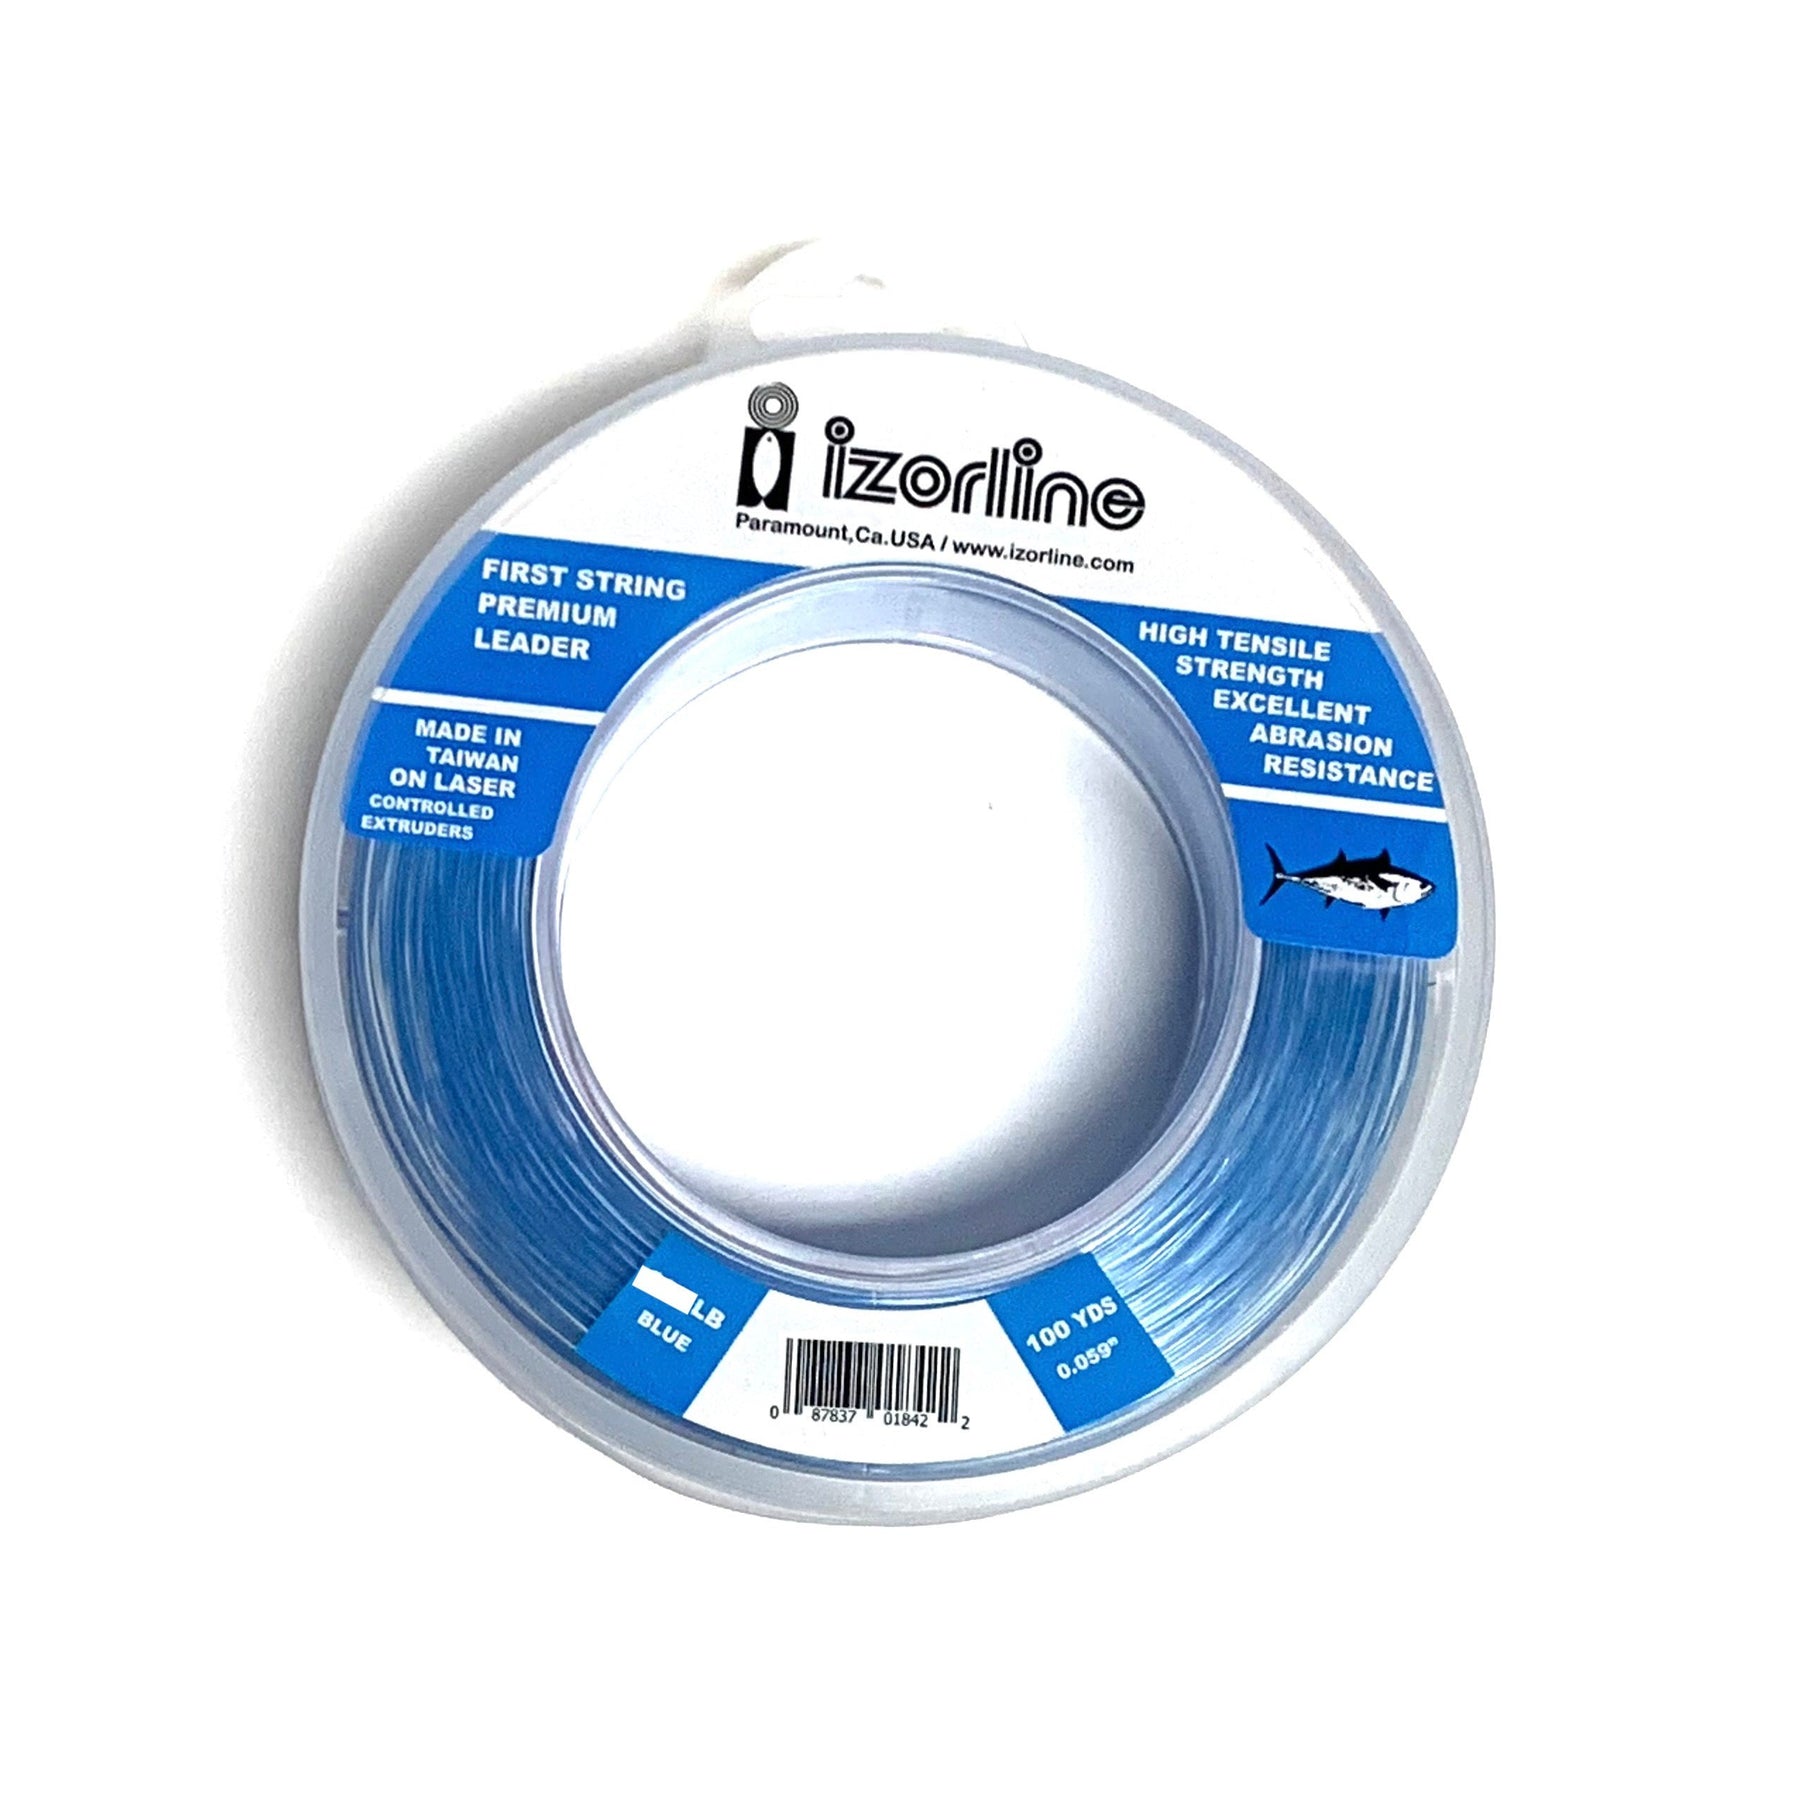 Izorline First String Premium Poly Monofilament Leader Line 200lb 100yds Wrist Spool Blue